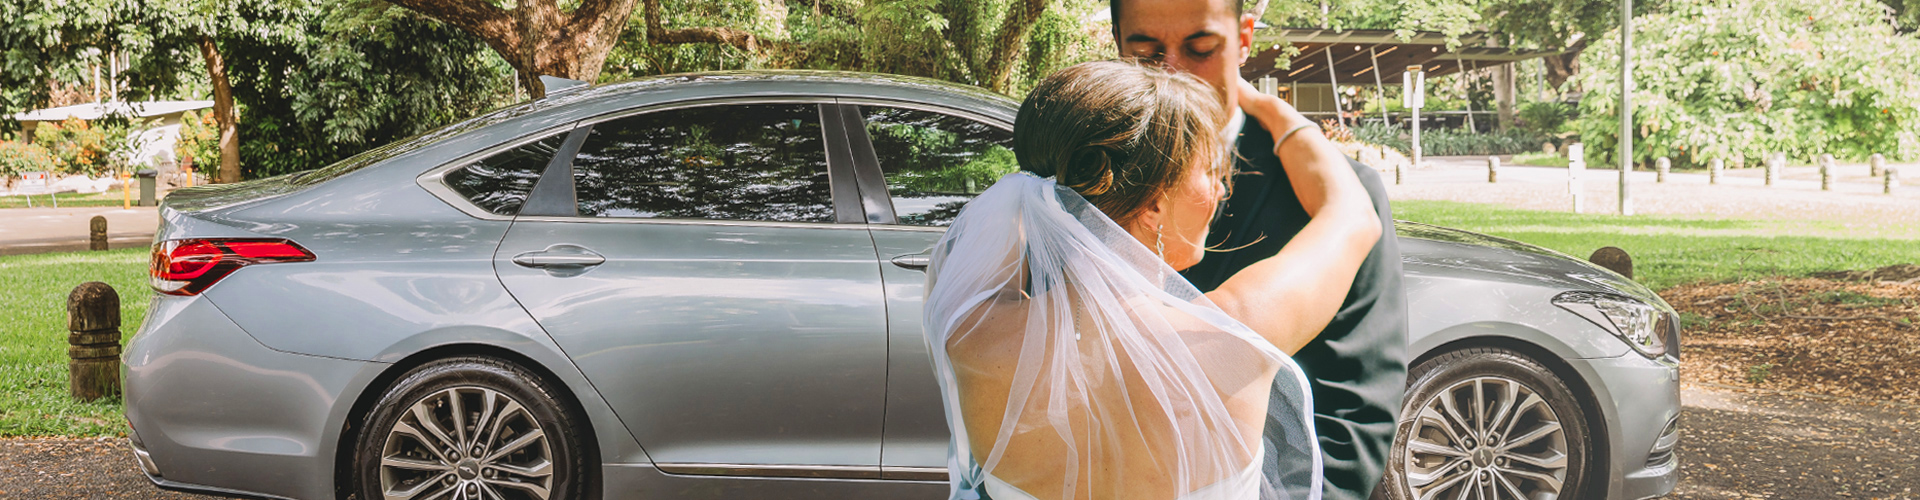 Out'n'back Limos Bridal Car for Weddings